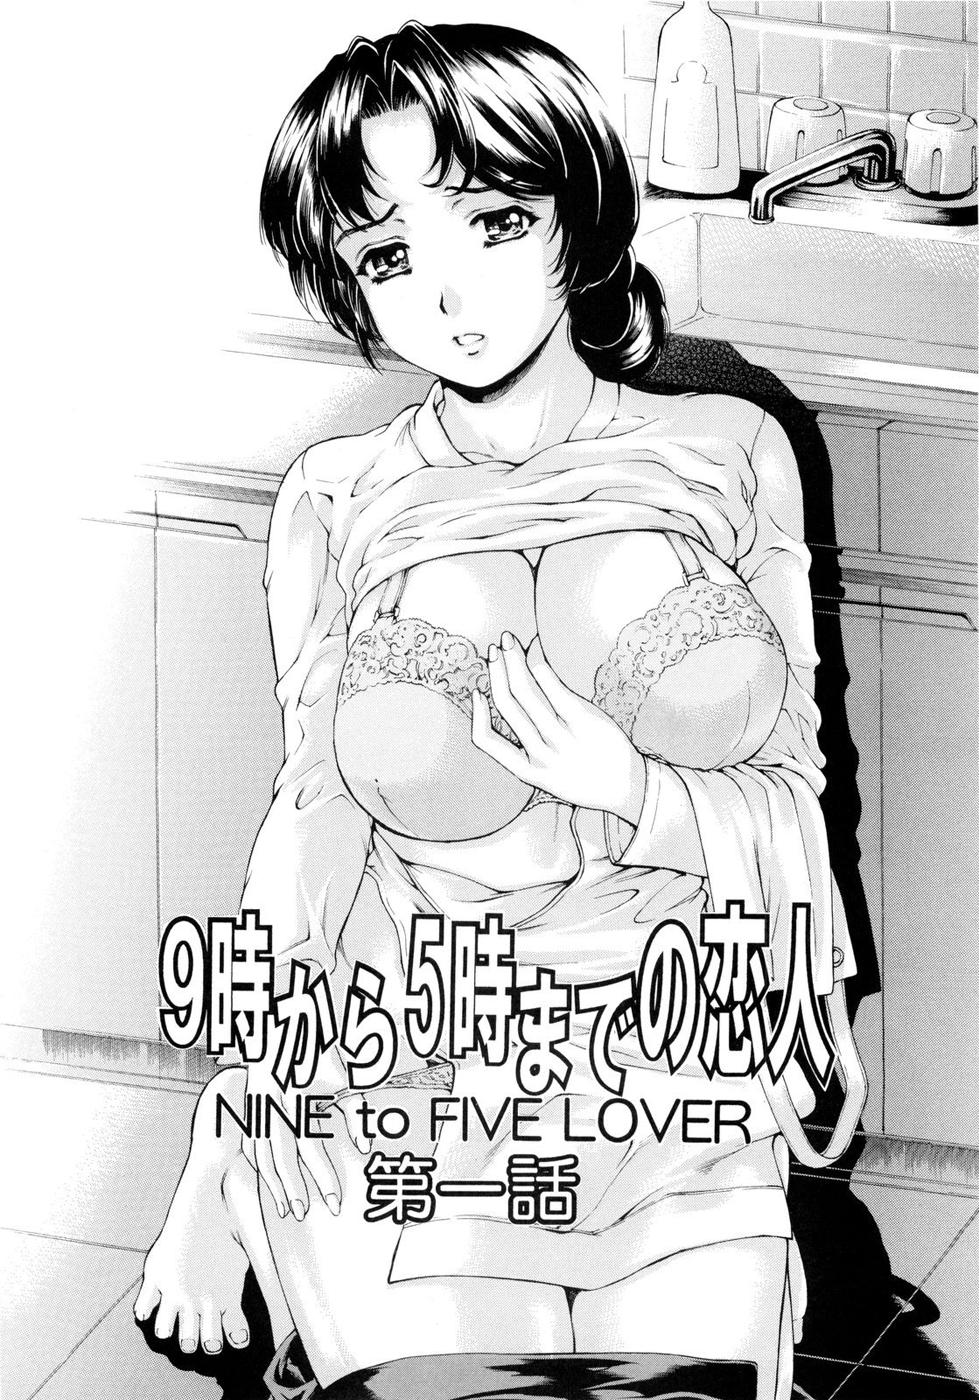 Nine to Five Lover Vol. 1 5